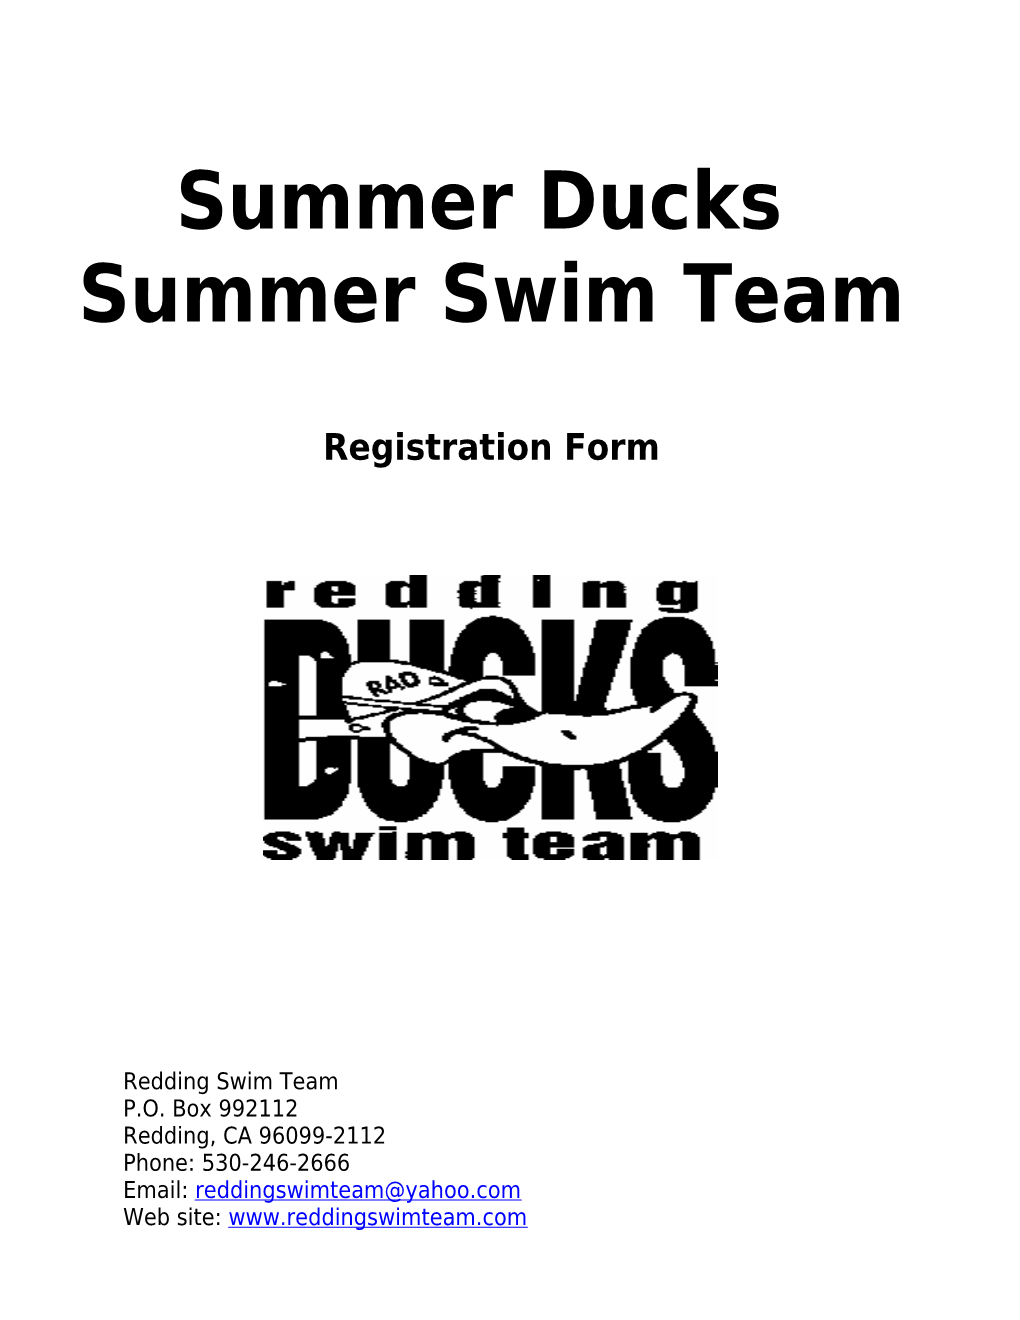 Summer Swim Team